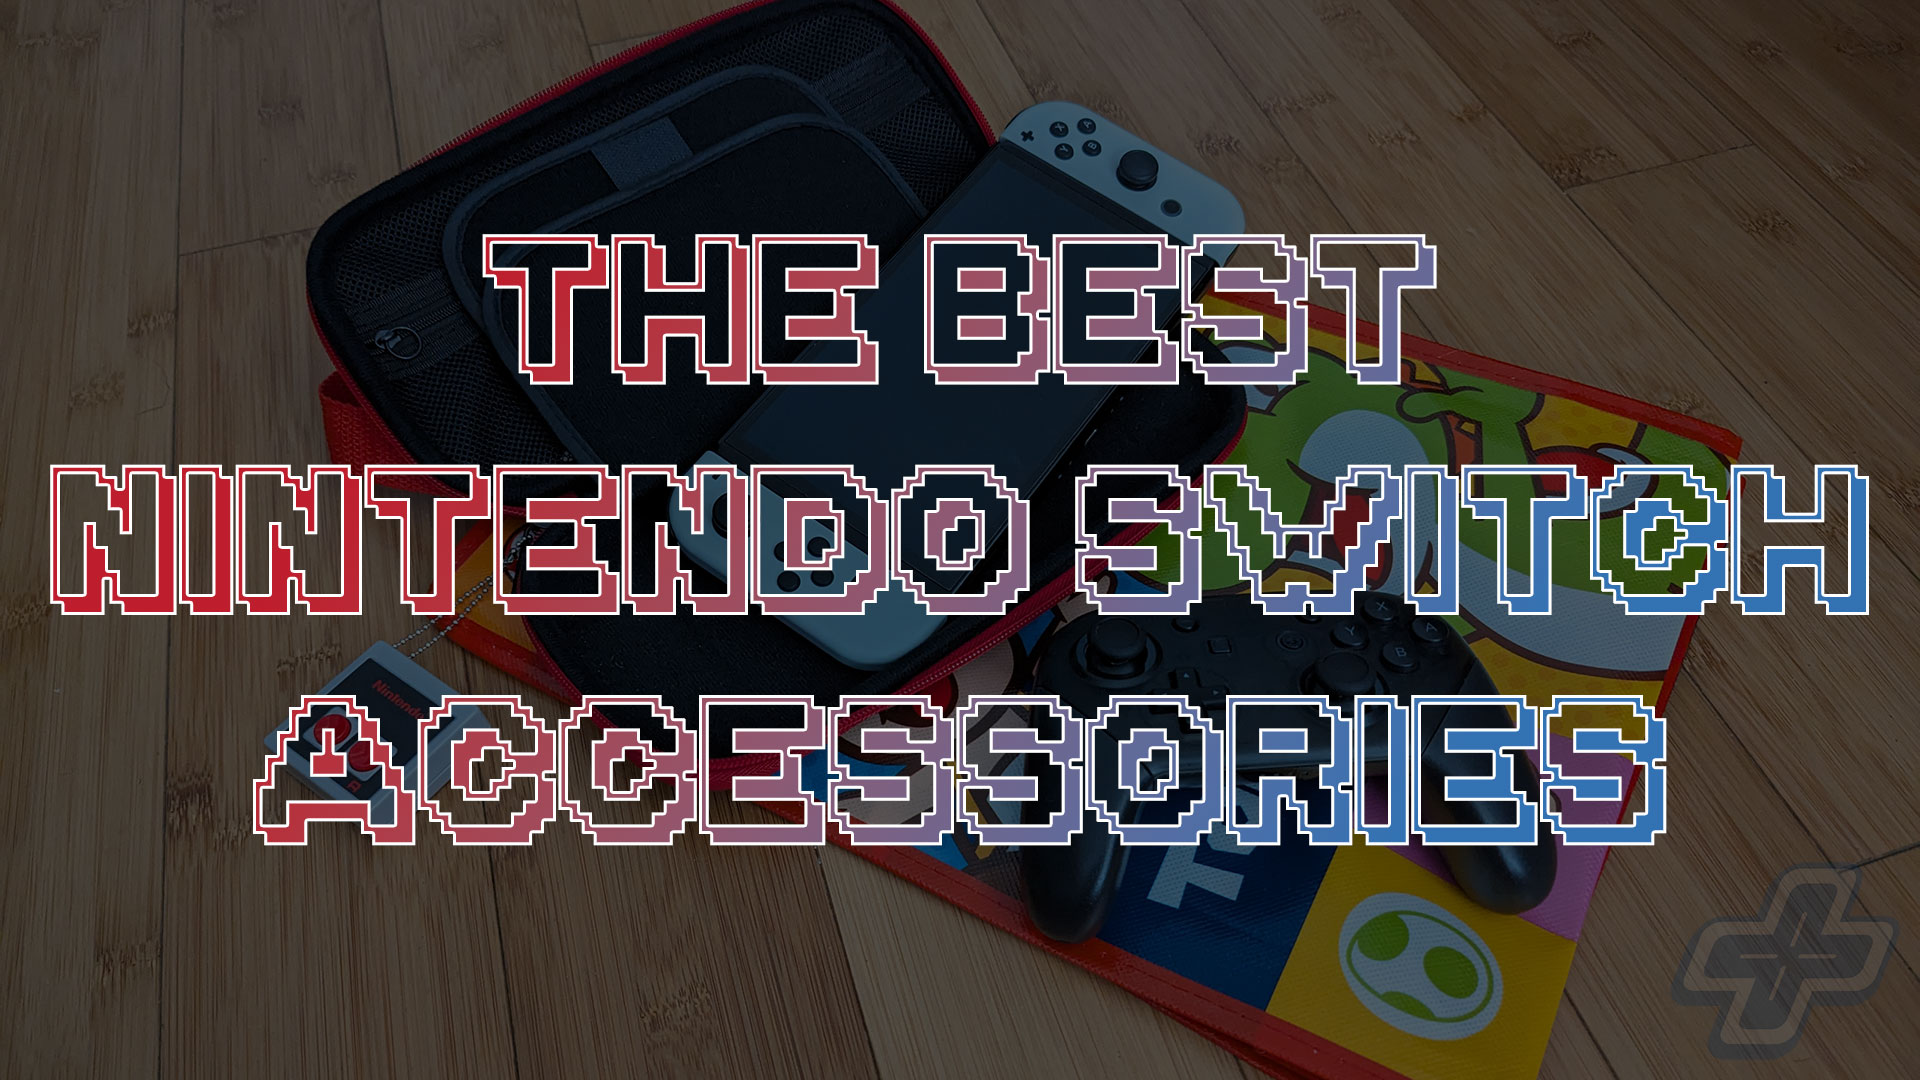 The Best Nintendo Switch Accessories | Photo Credit: Jason Siu, FullCleared.com